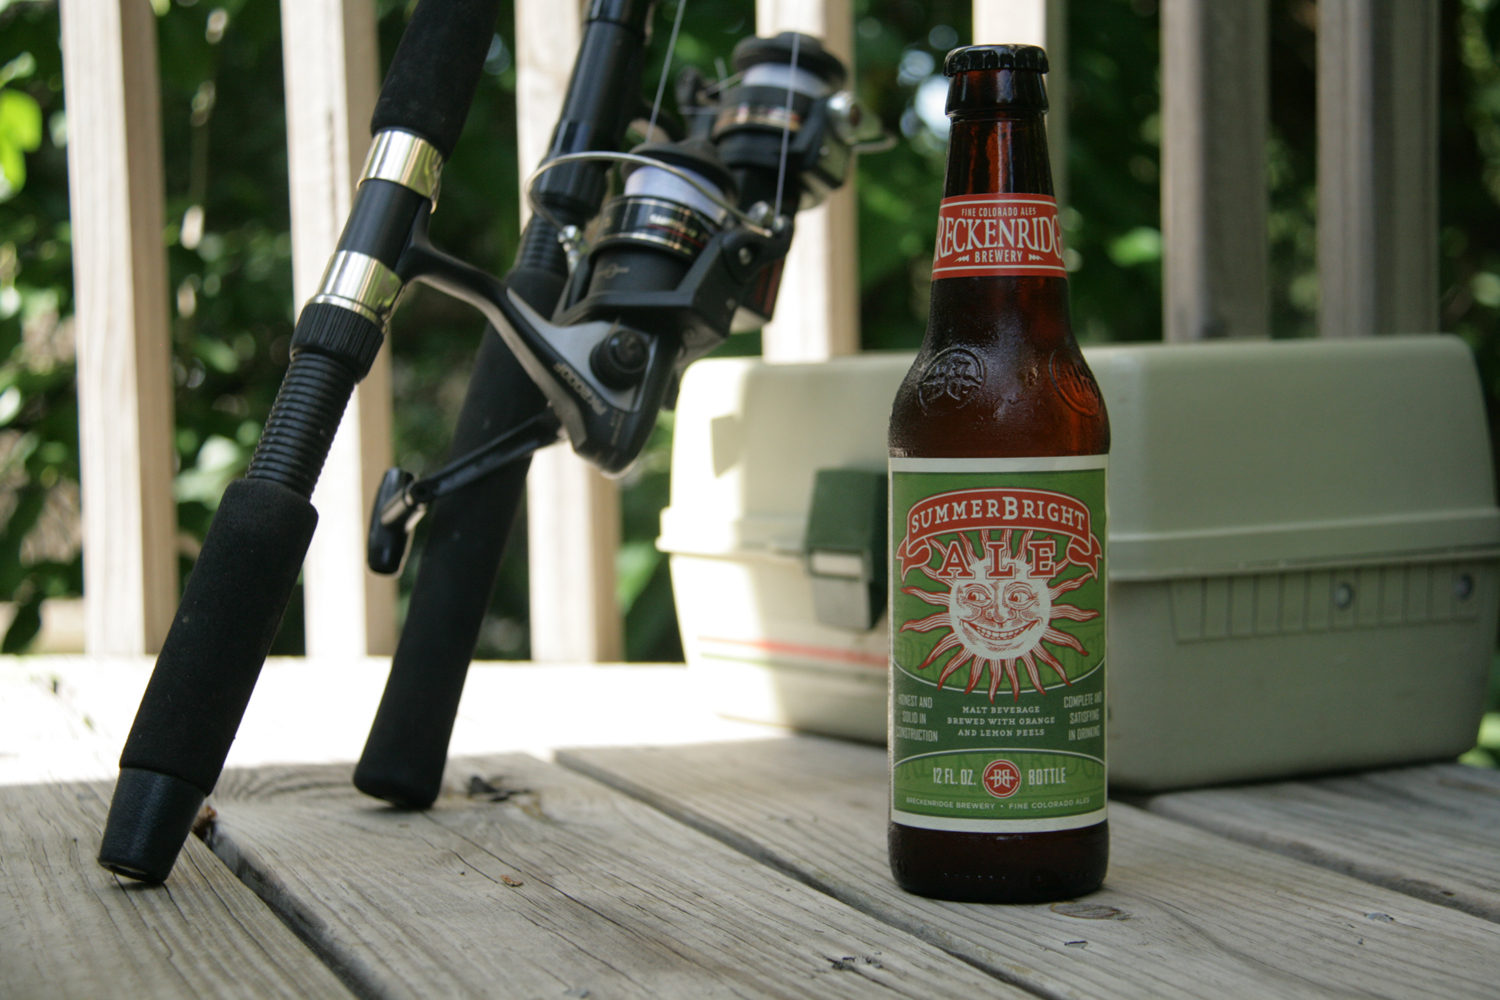 Enjoy Breckenridge's SummerBright summer ale in the sun.